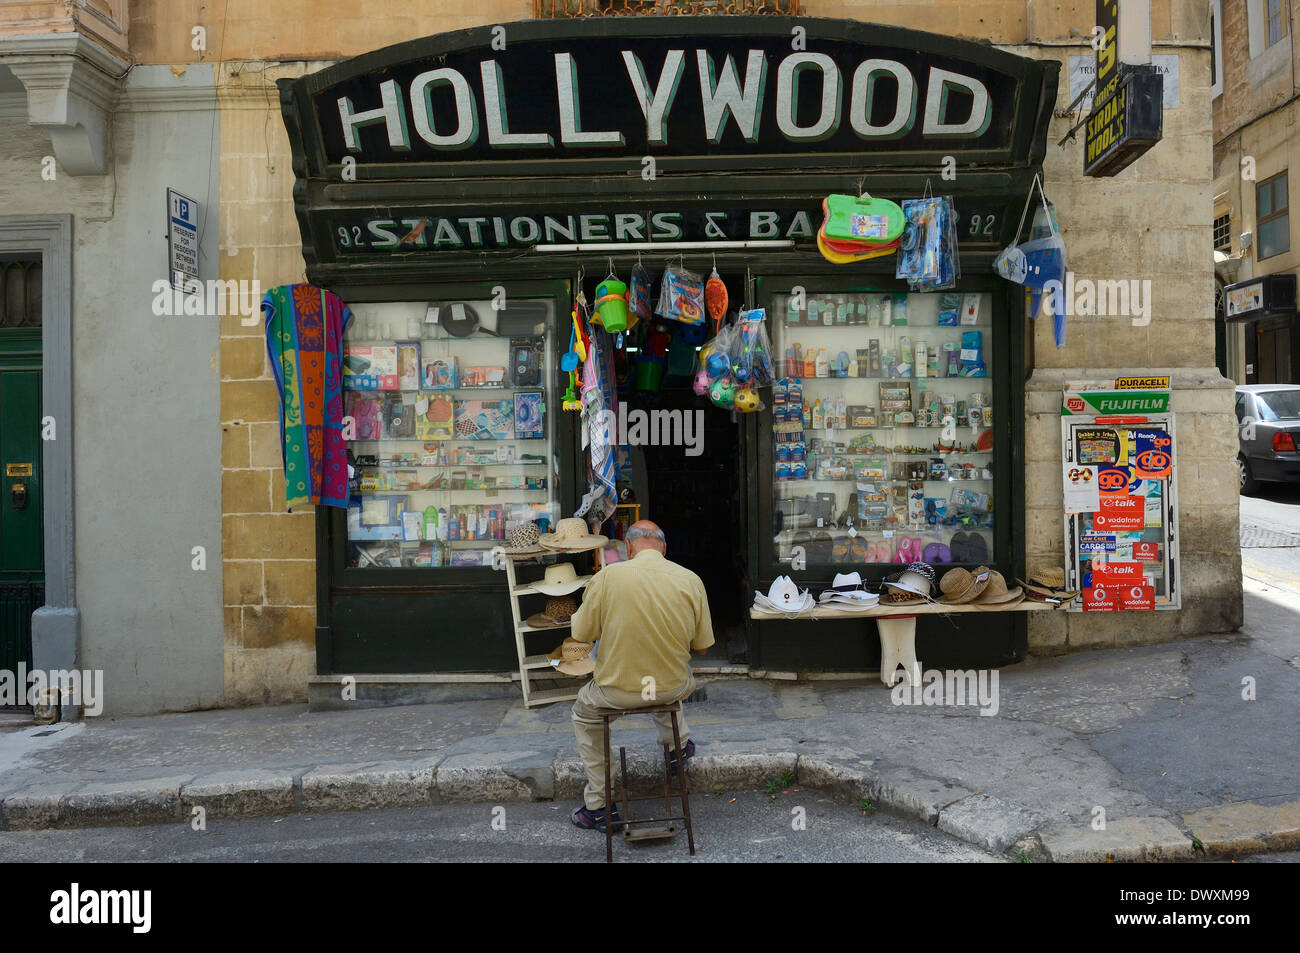 Hollywood Stationers and Bazaar. Corner shop Valletta Malta Stock Photo